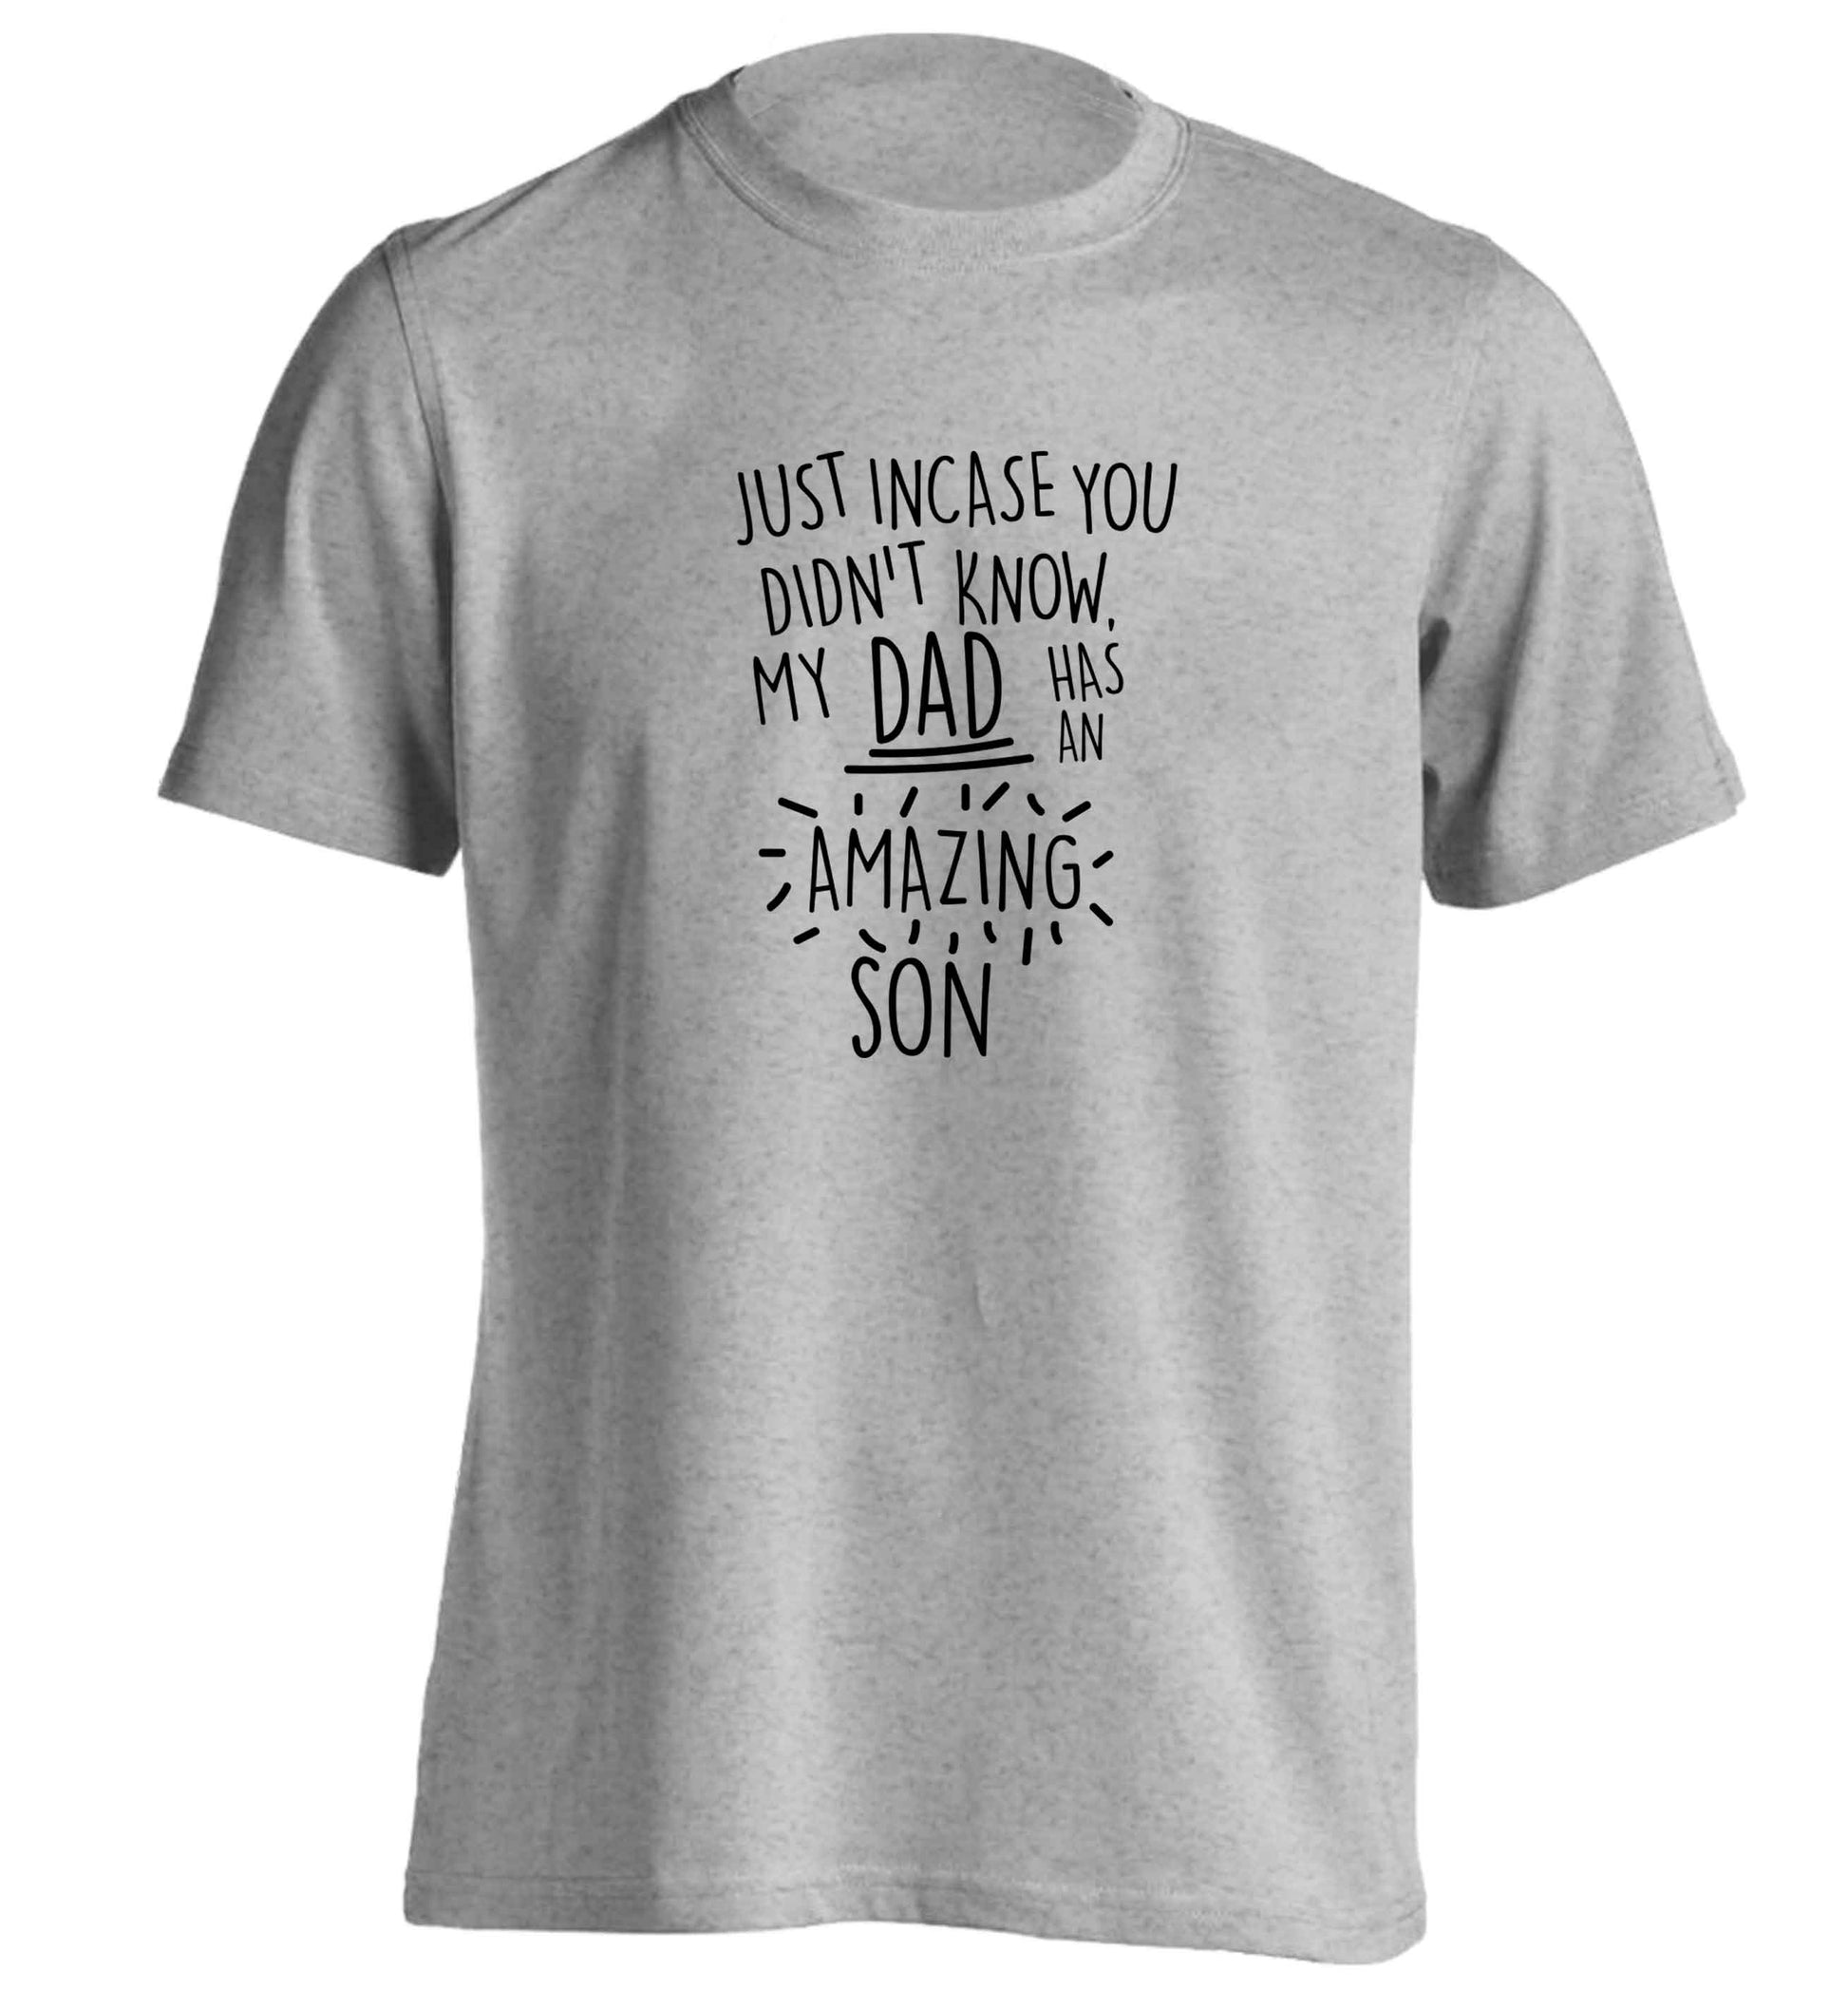 Just incase you didn't know my dad has an amazing son adults unisex grey Tshirt 2XL